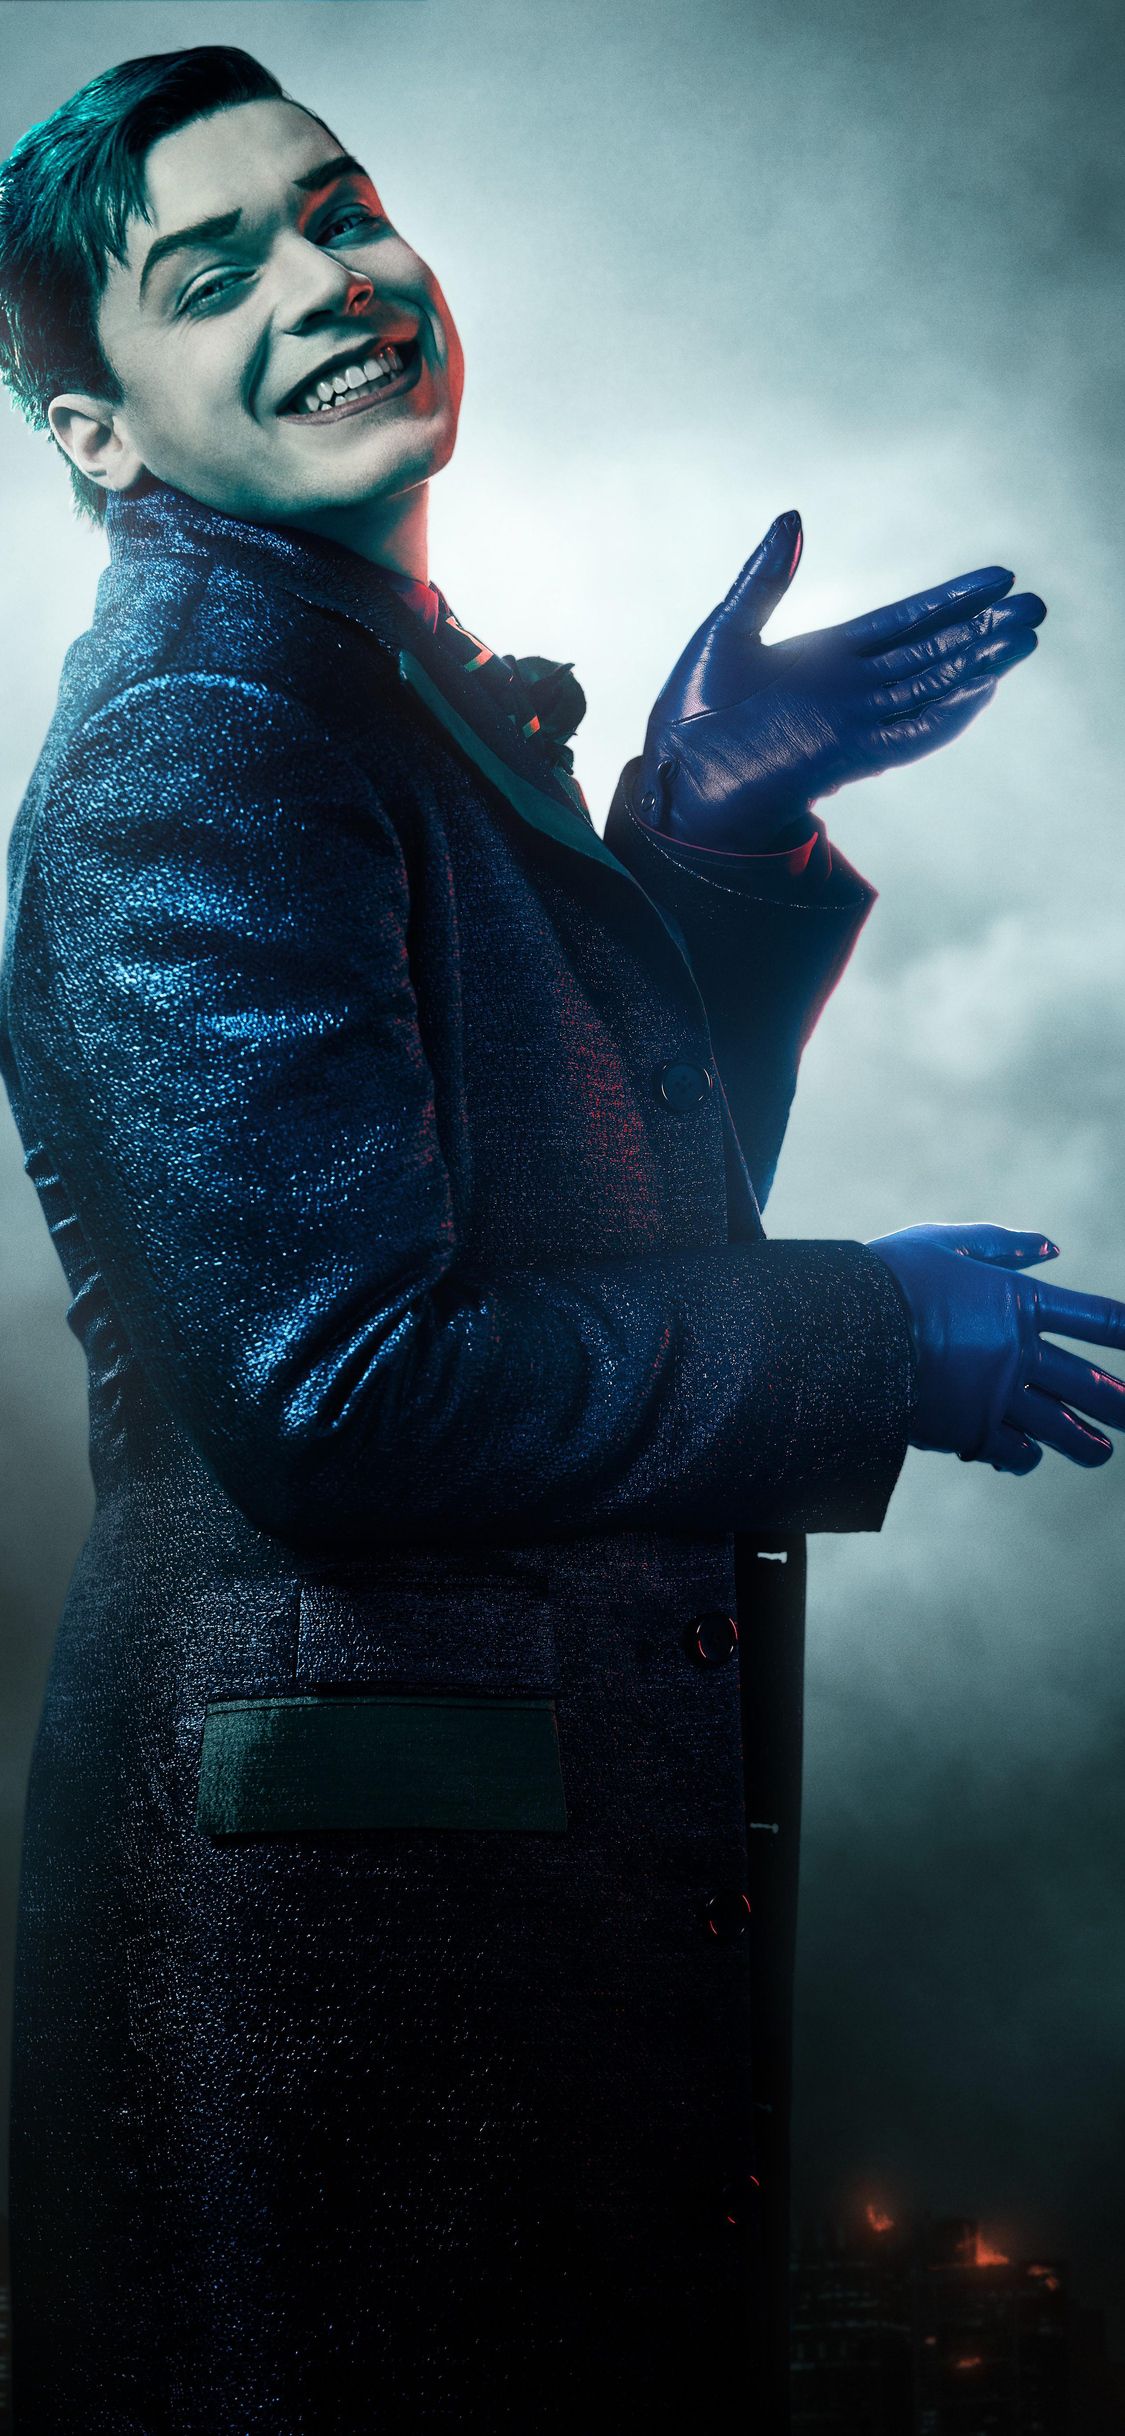 Cameron Monaghan As Jerome In Gotham Season 5 iPhone XS